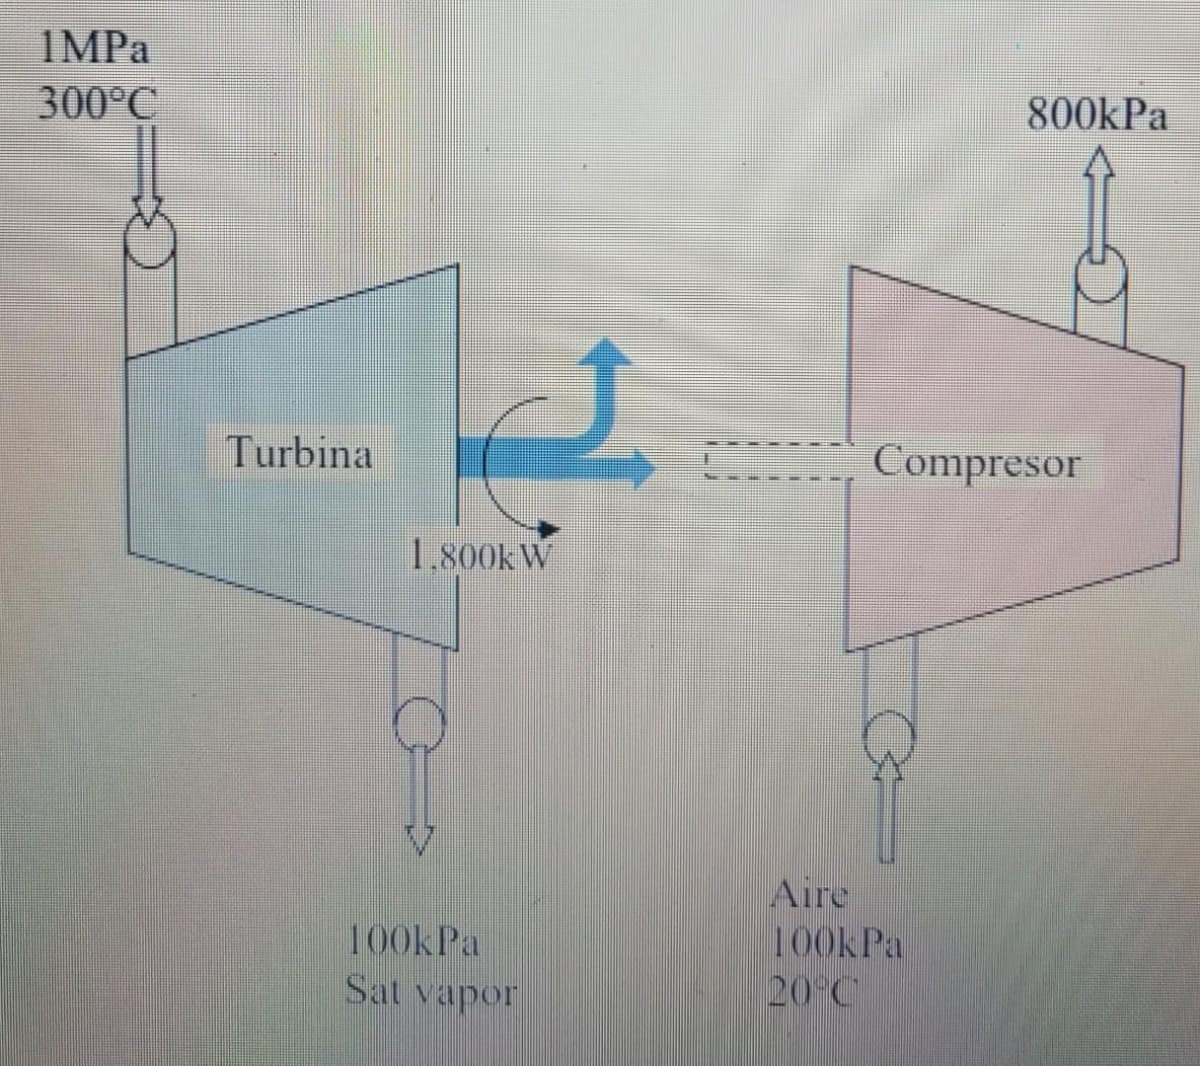 IMPA
300°C
800kPa
Turbina
Compresor
1.800k W
Aire
100kPa
20 C
100kPa
Sat vapor
